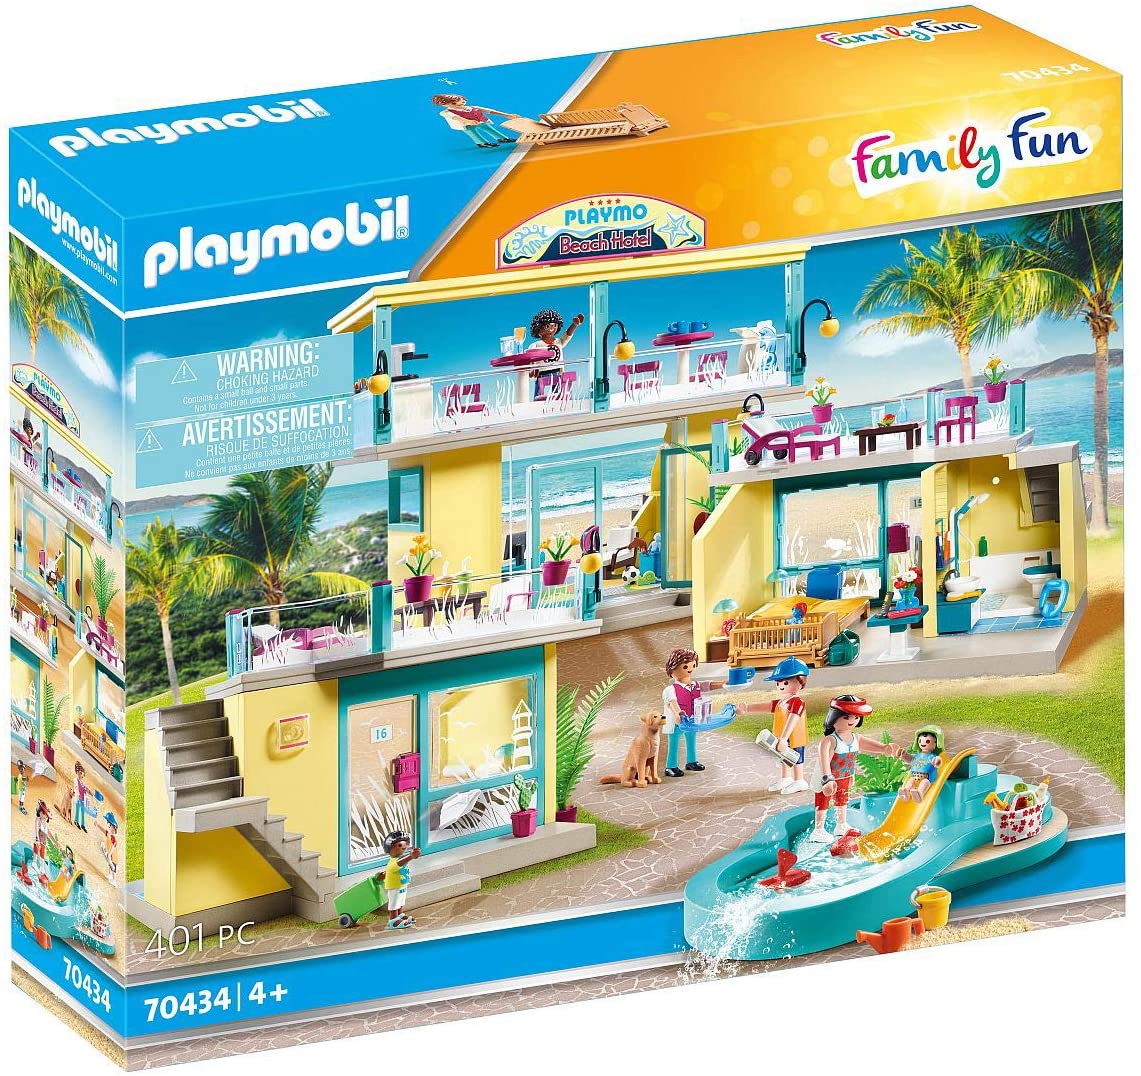 Playmobil Family Fun 70434 Playmo Beach Hotel 4 Years And Above